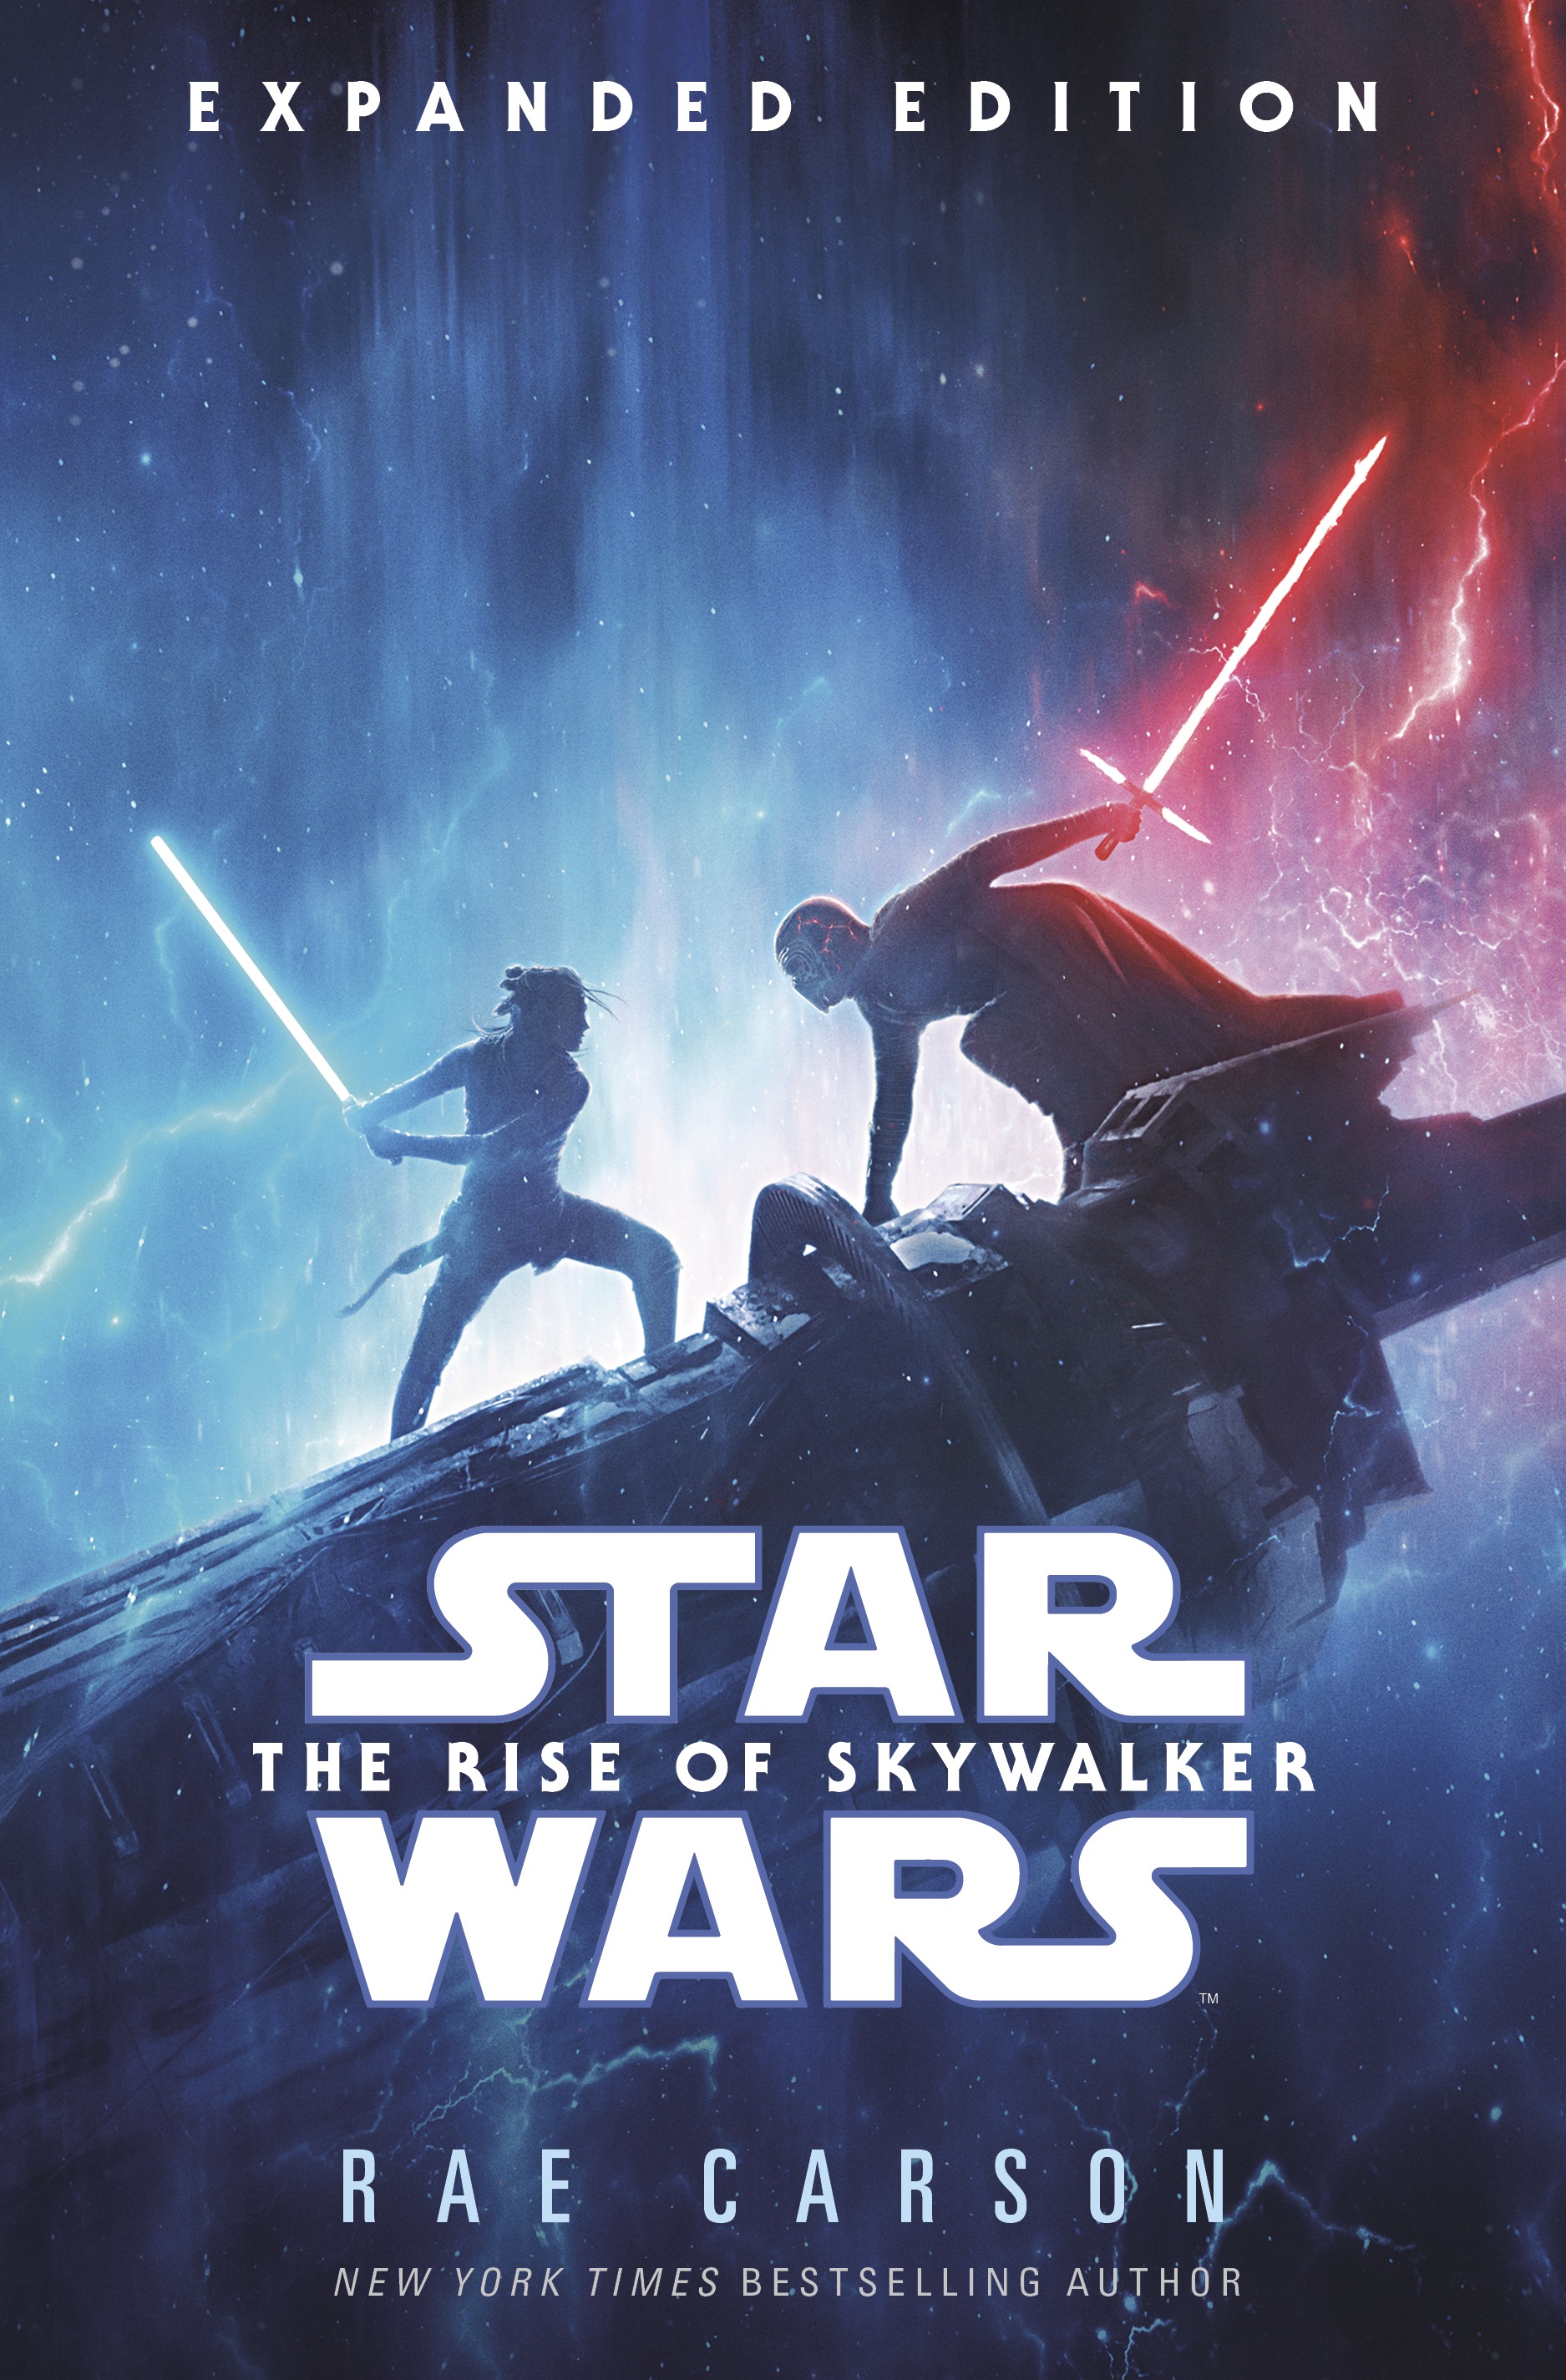 star wars rise of skywalker